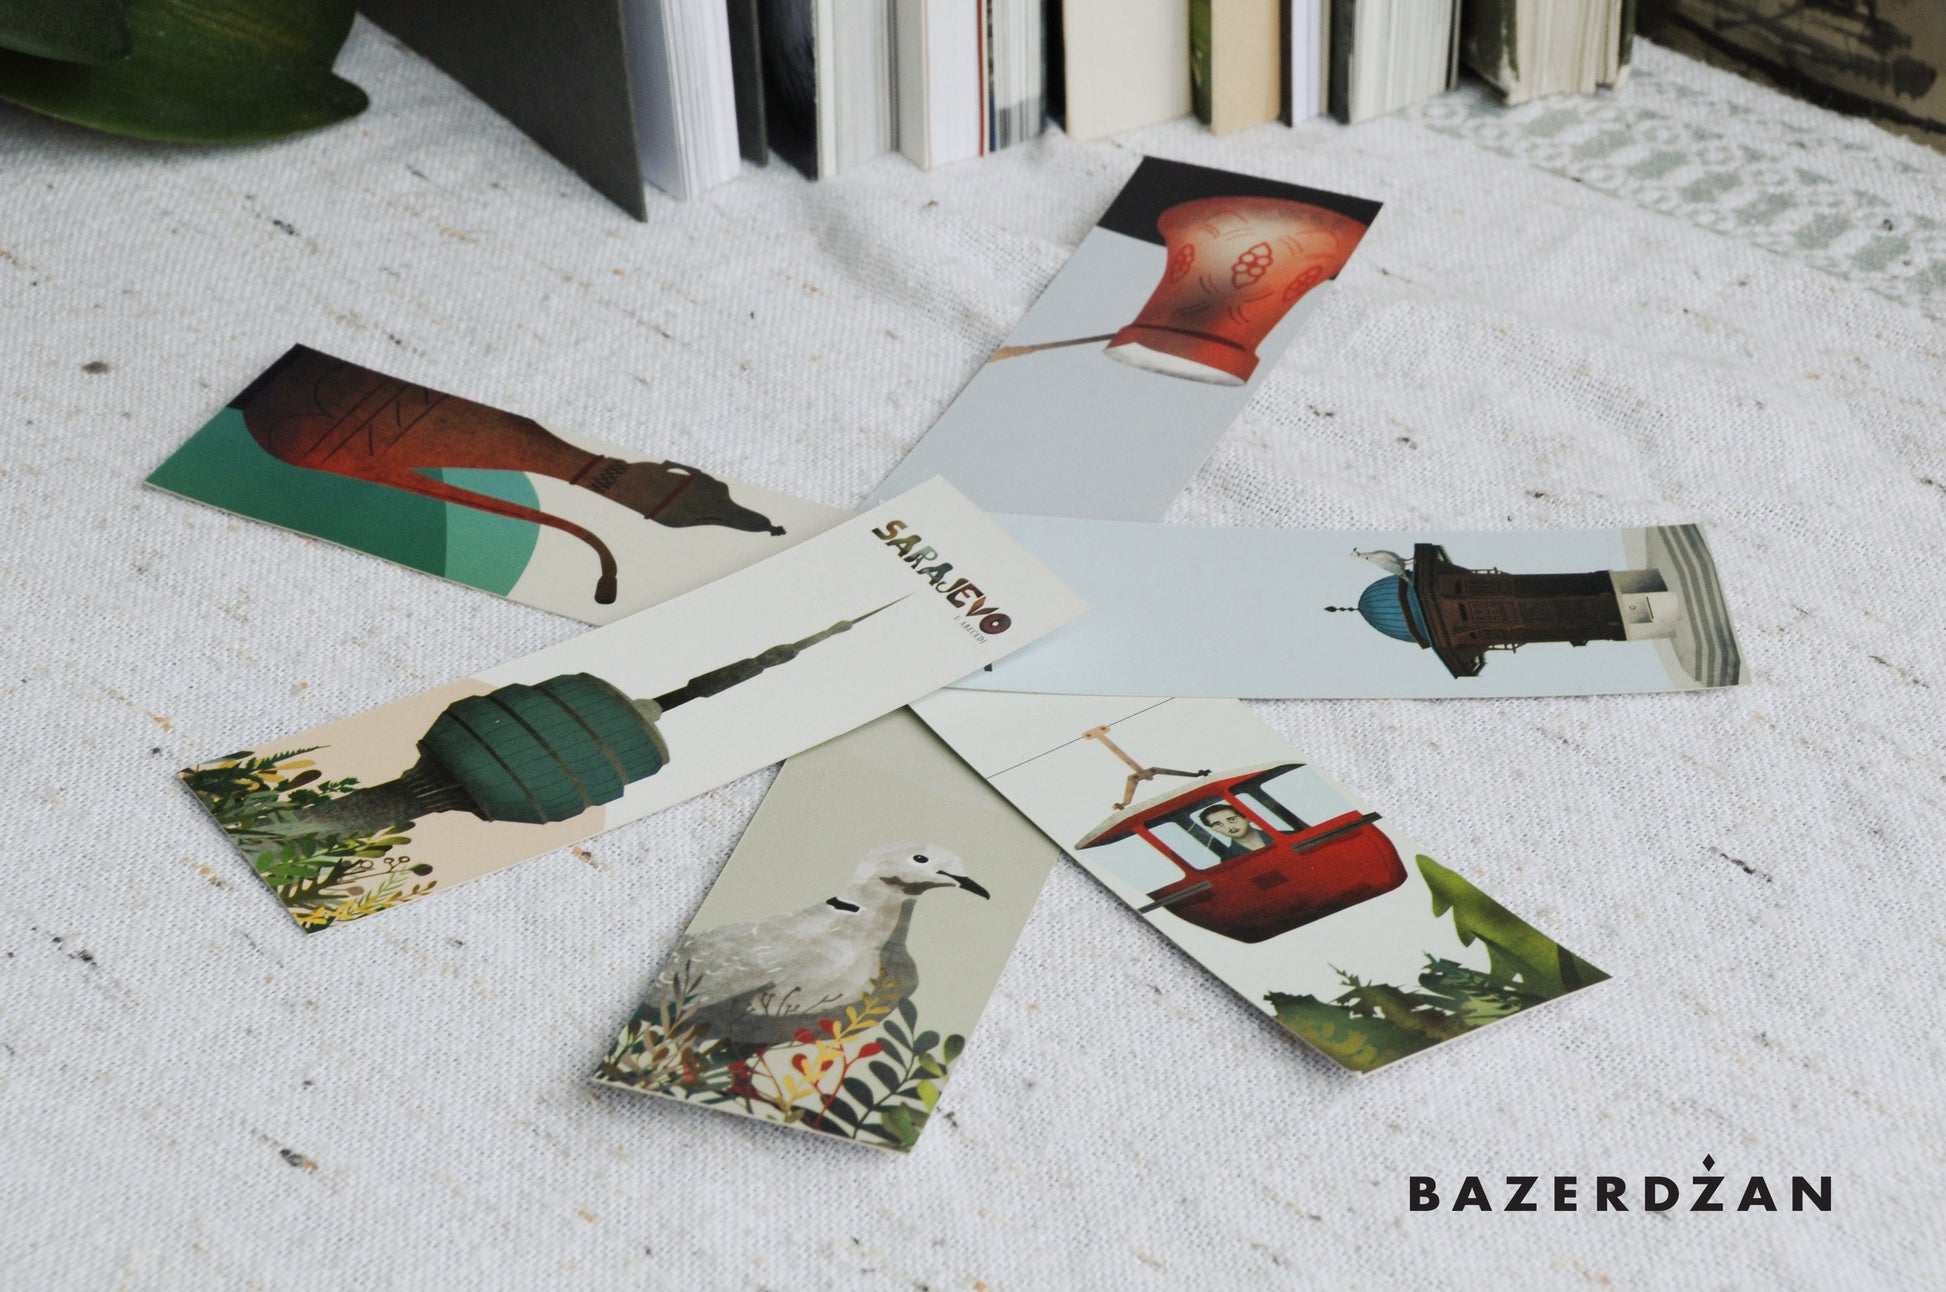 Sarajevo Bookmarks, Illustrated by Sasa Masks - Bazerdzan